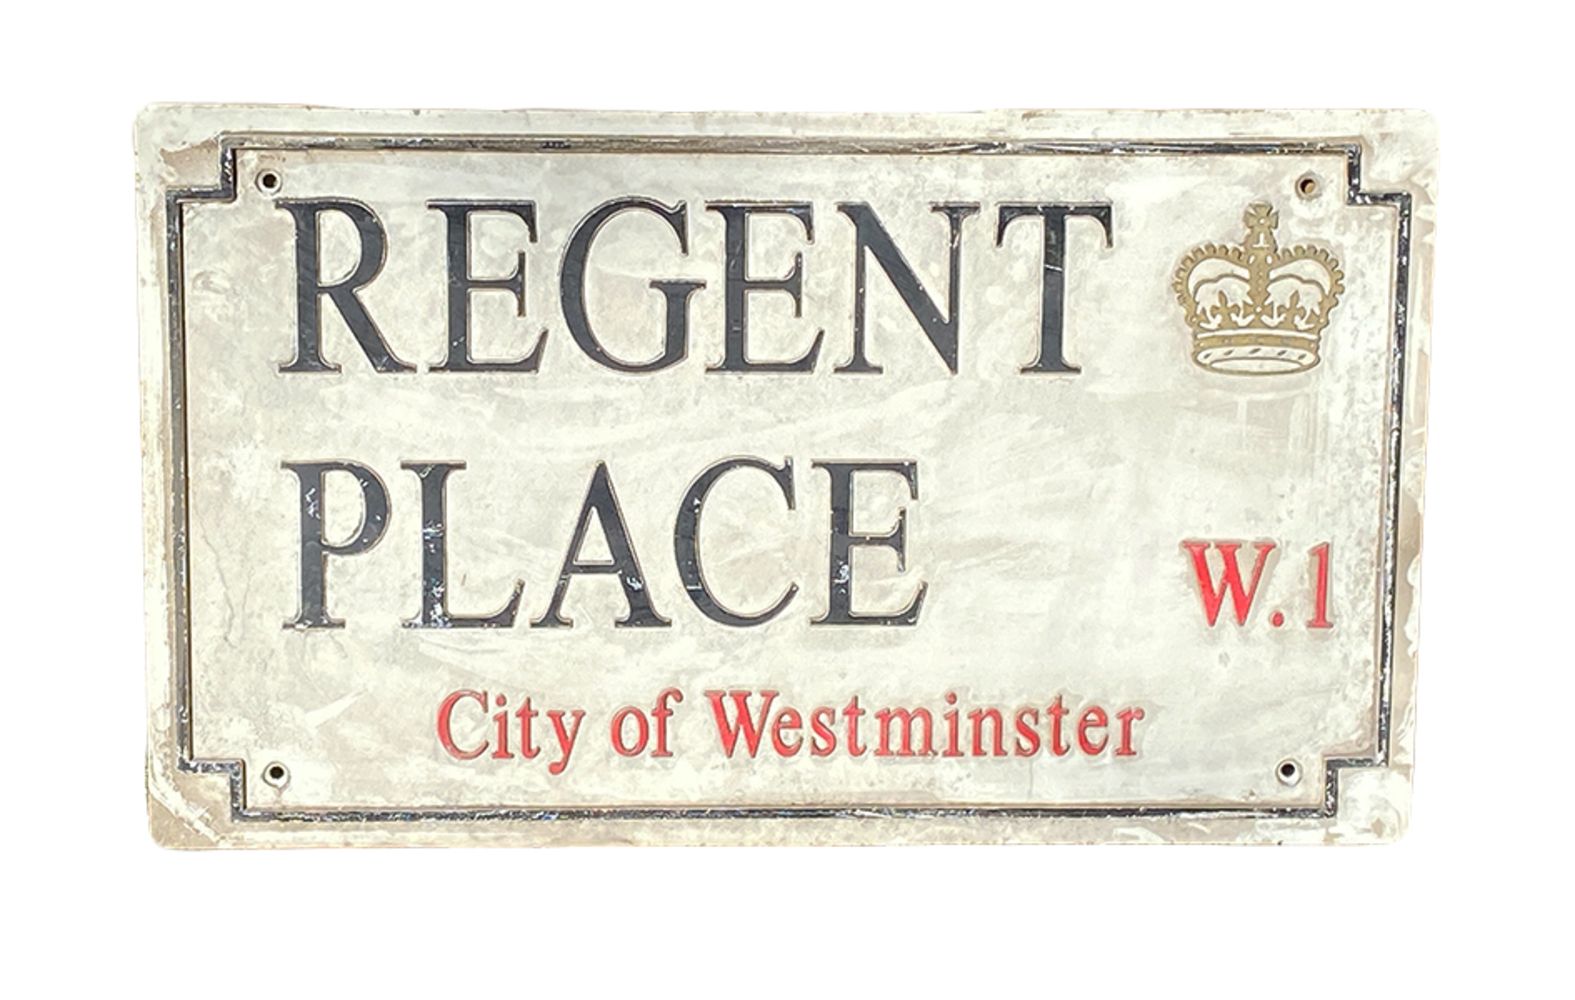 London Street Sign Auction